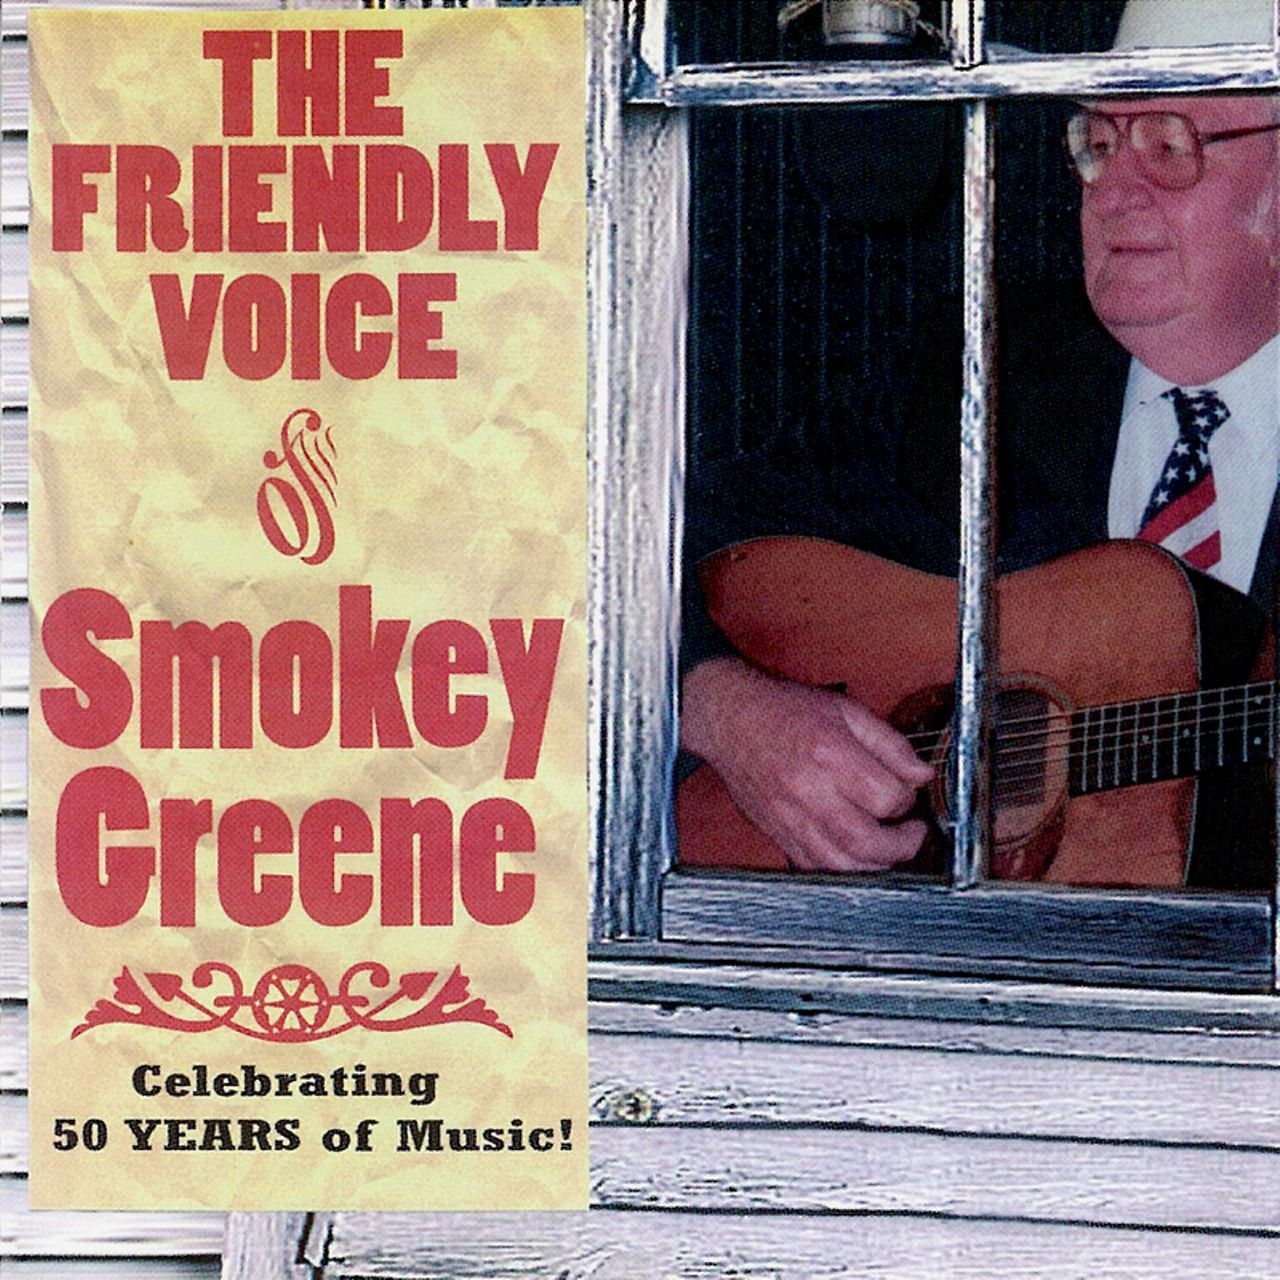 Smokey Greene - The Friendly Voice Of... cover album